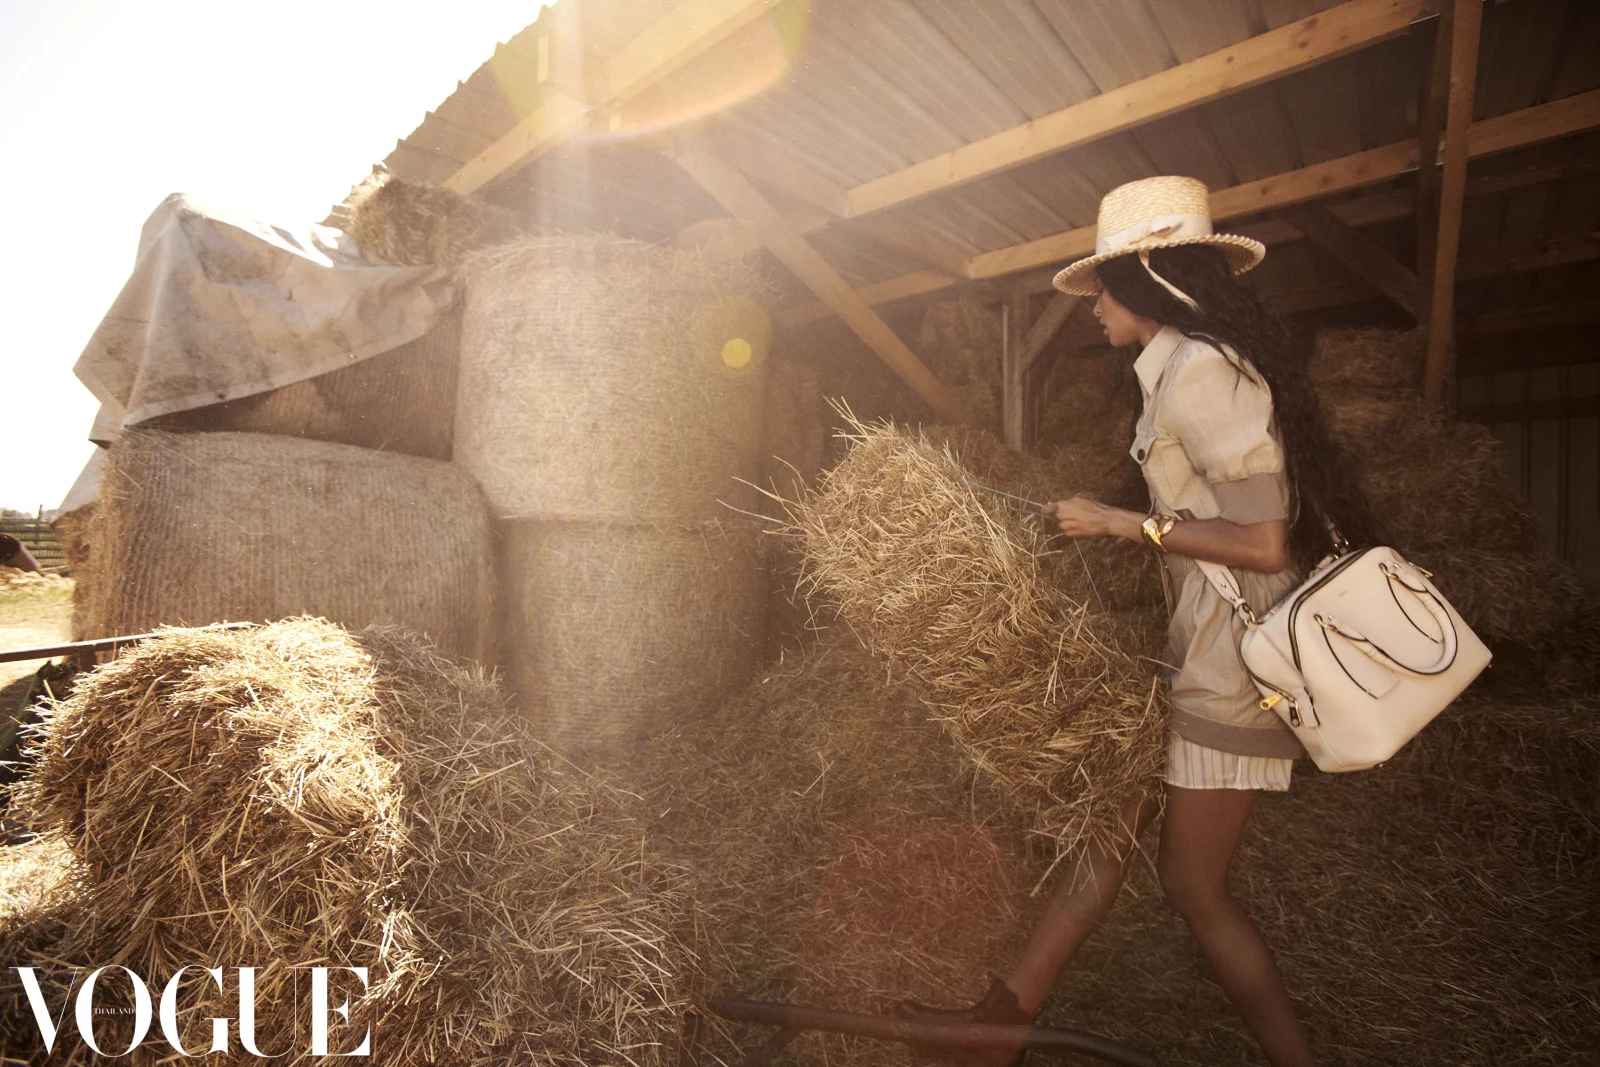 Vogue Thailand 2 by Joseph DEGBADJO